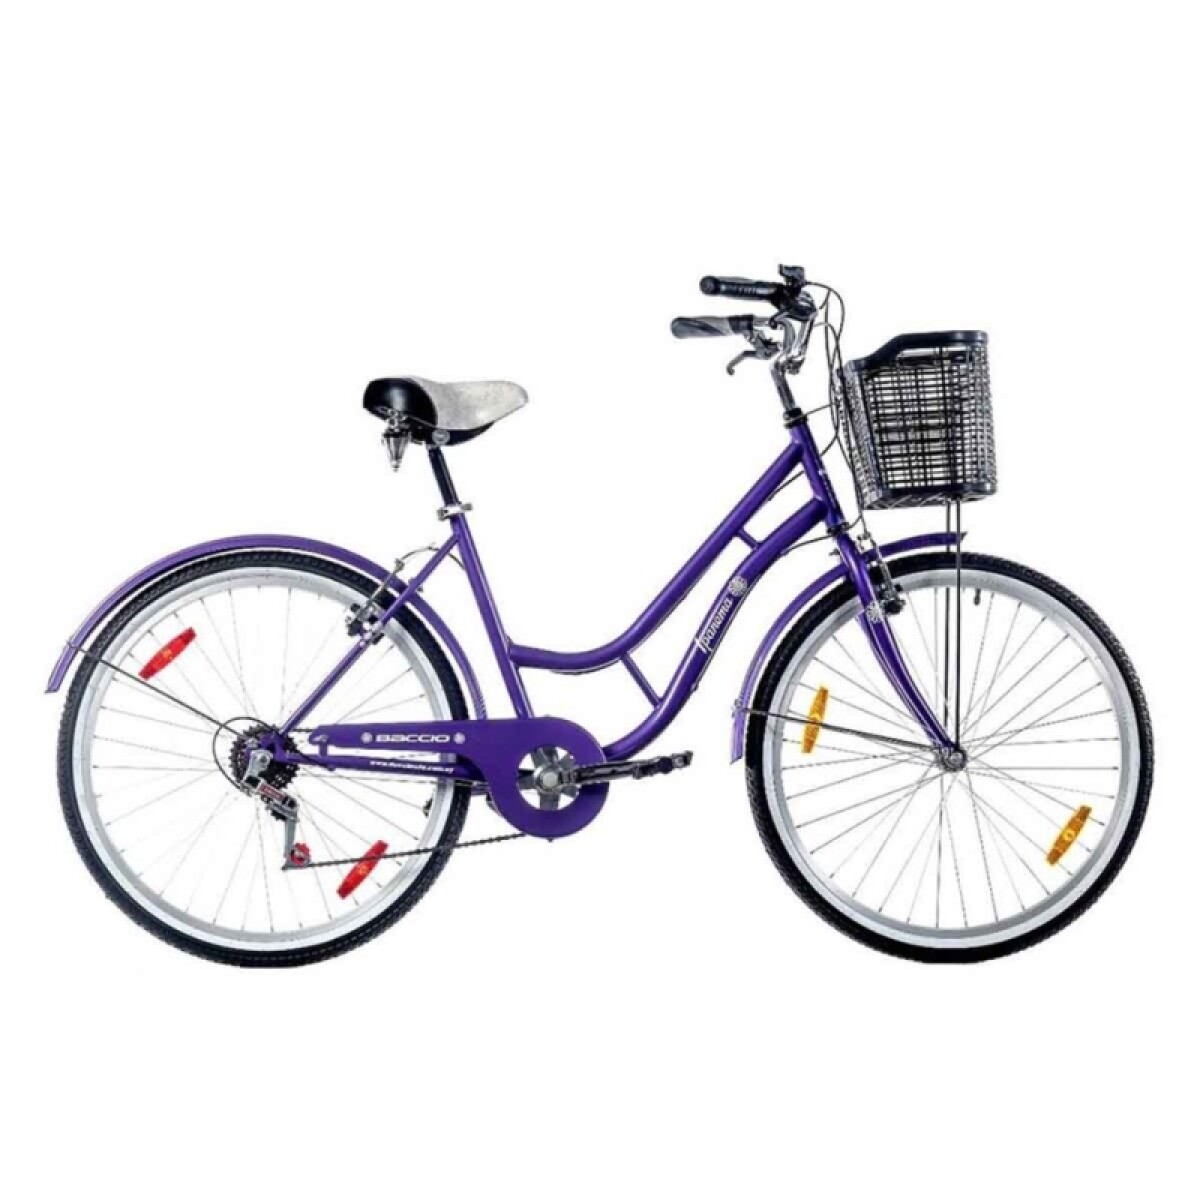 Bicicleta Baccio R.26 Dama Ipanema 6v Urbana - Violeta 